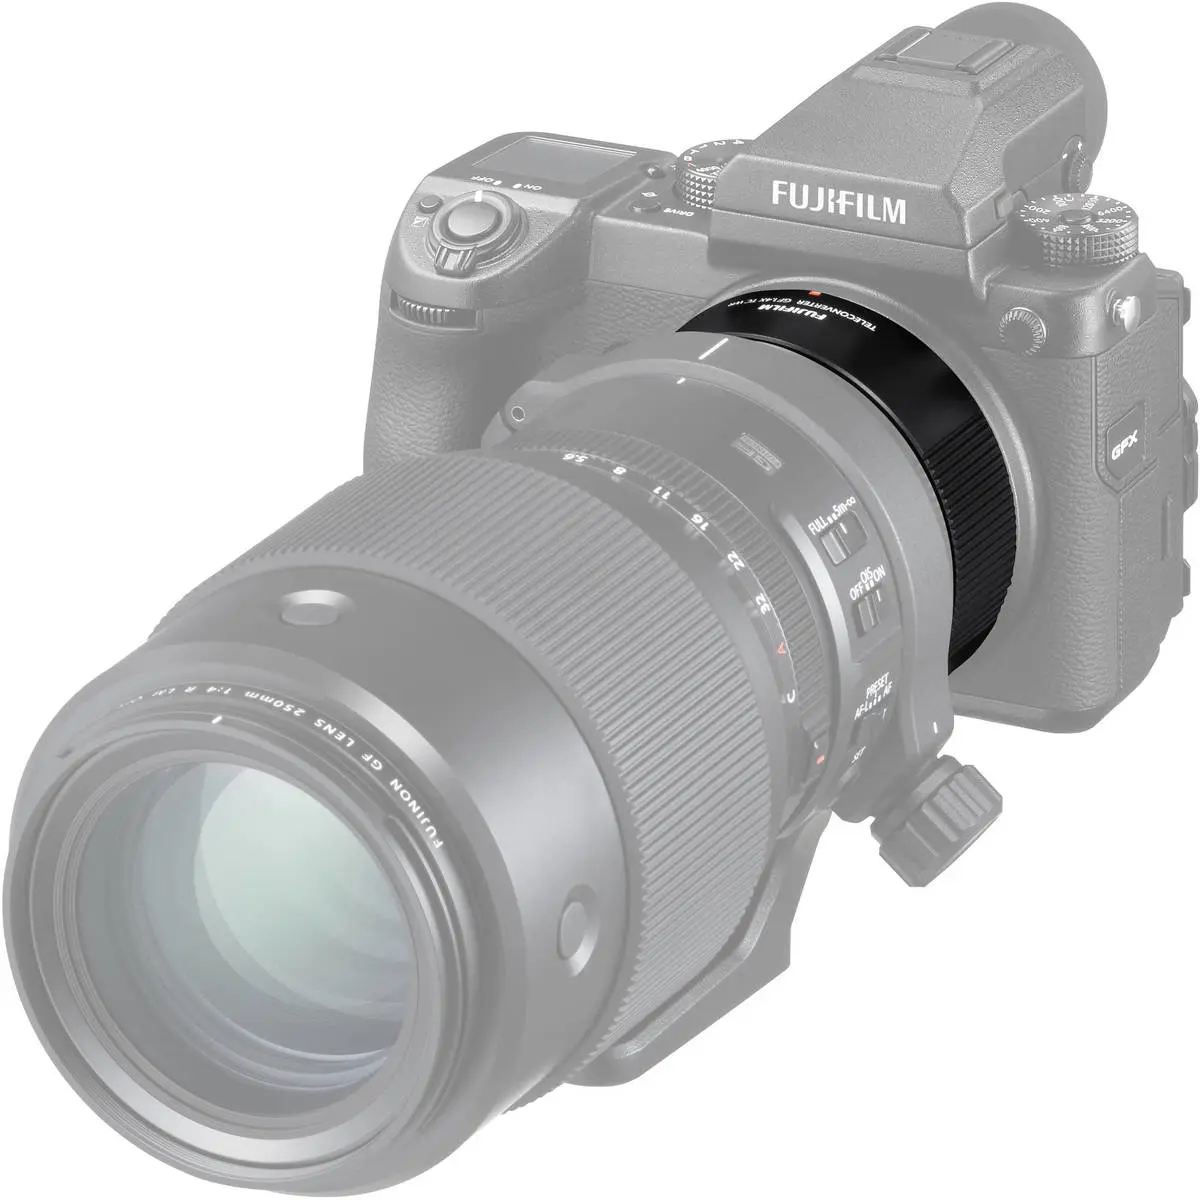 2. Fujifilm FUJINON GF 1.4X TC WR Teleconverter Lens